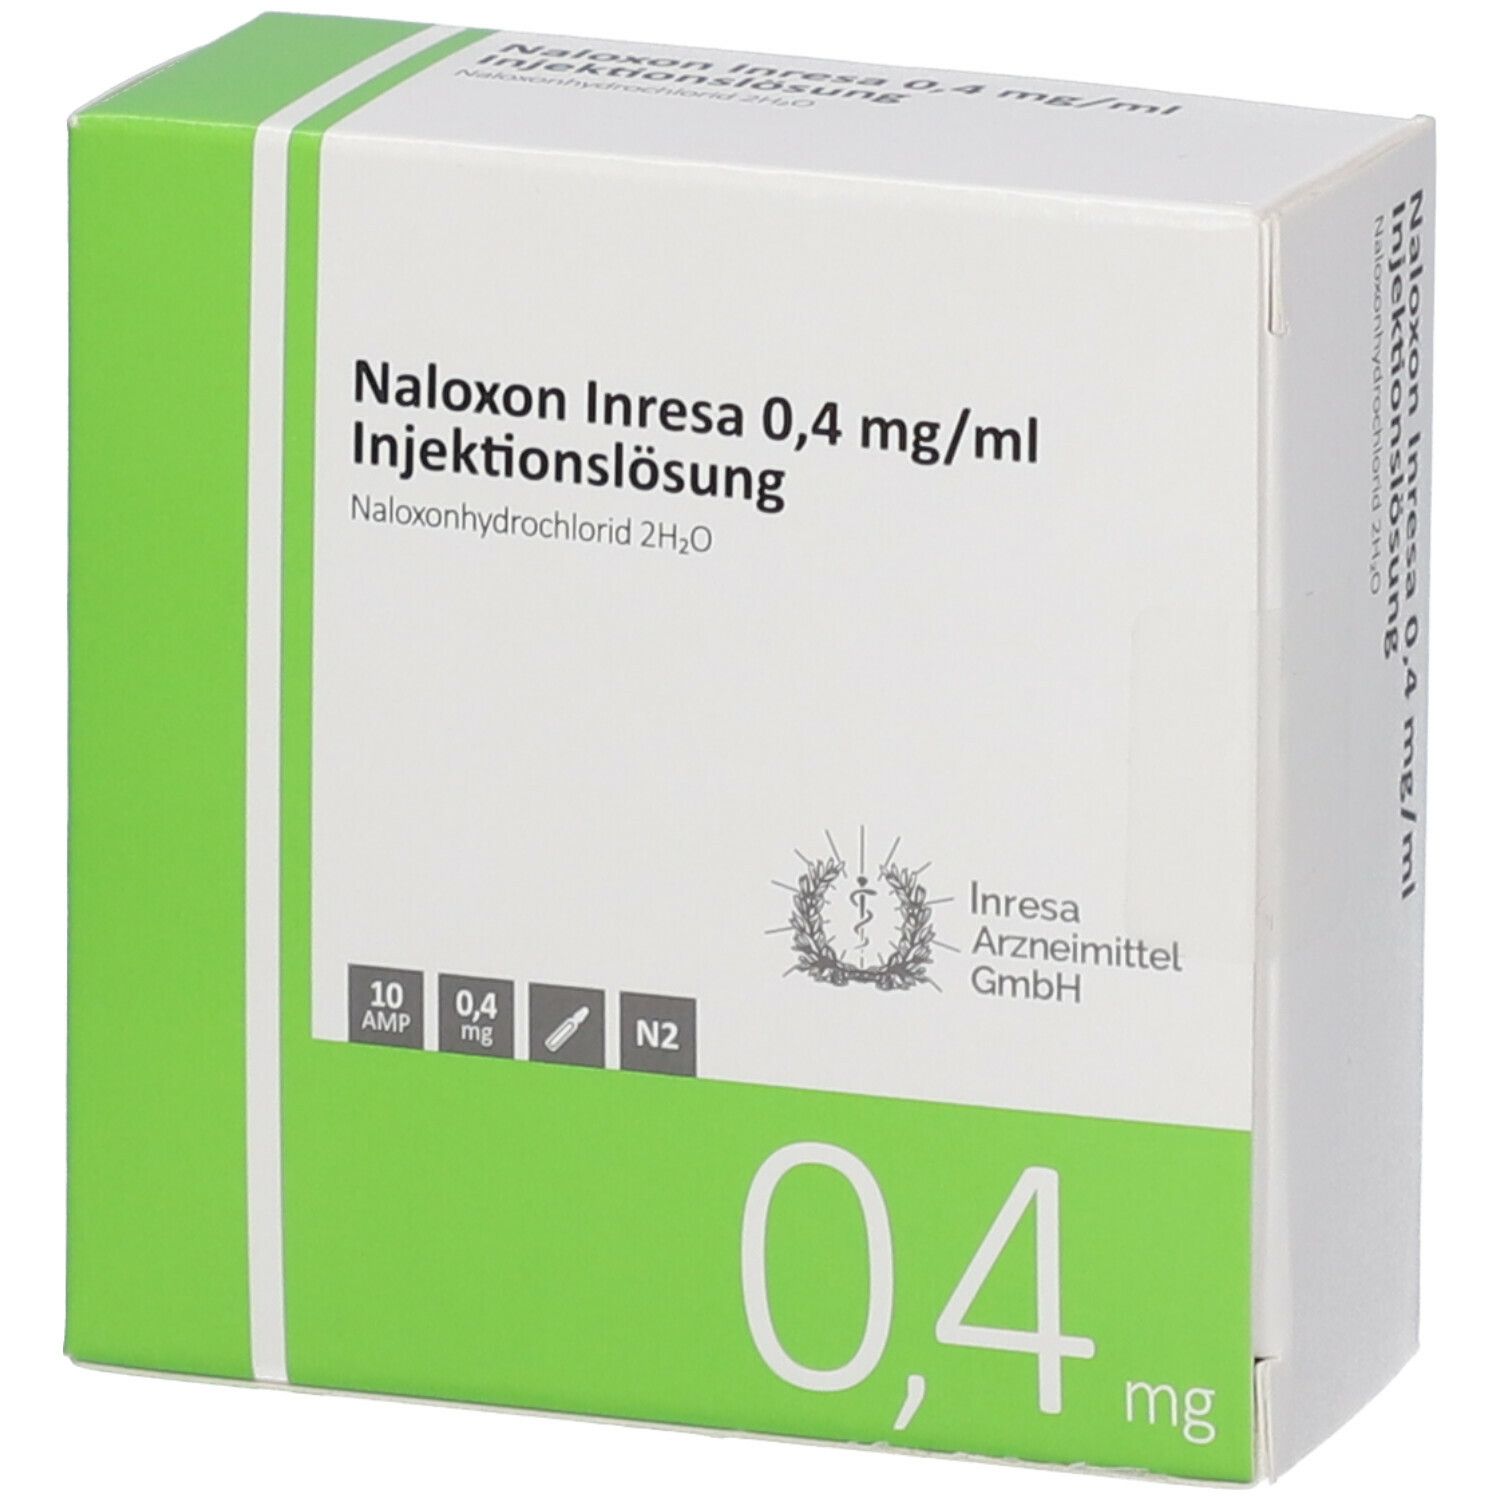 Naloxon Inresa 0,4 mg